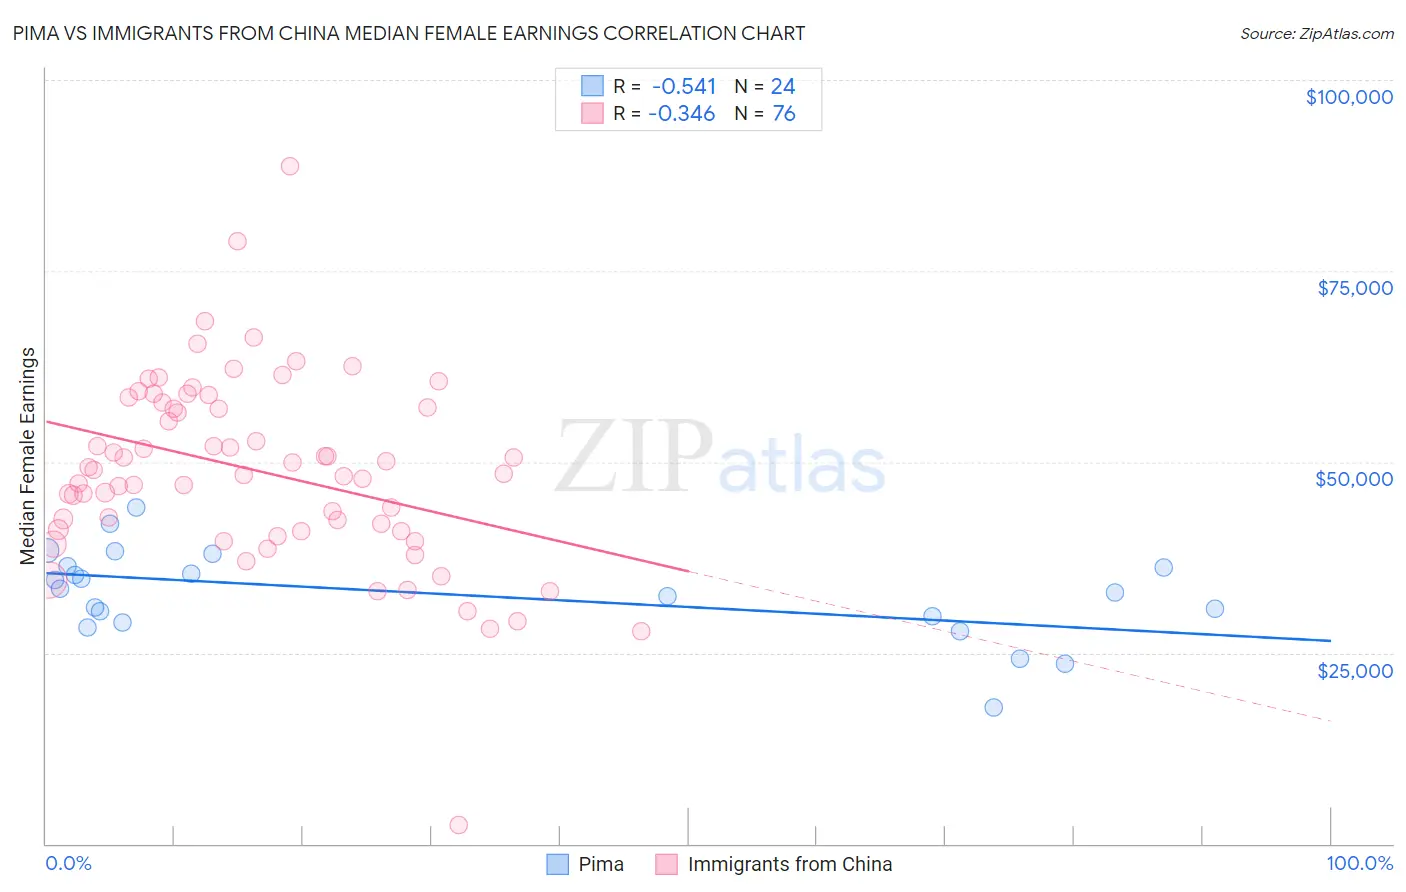 Pima vs Immigrants from China Median Female Earnings